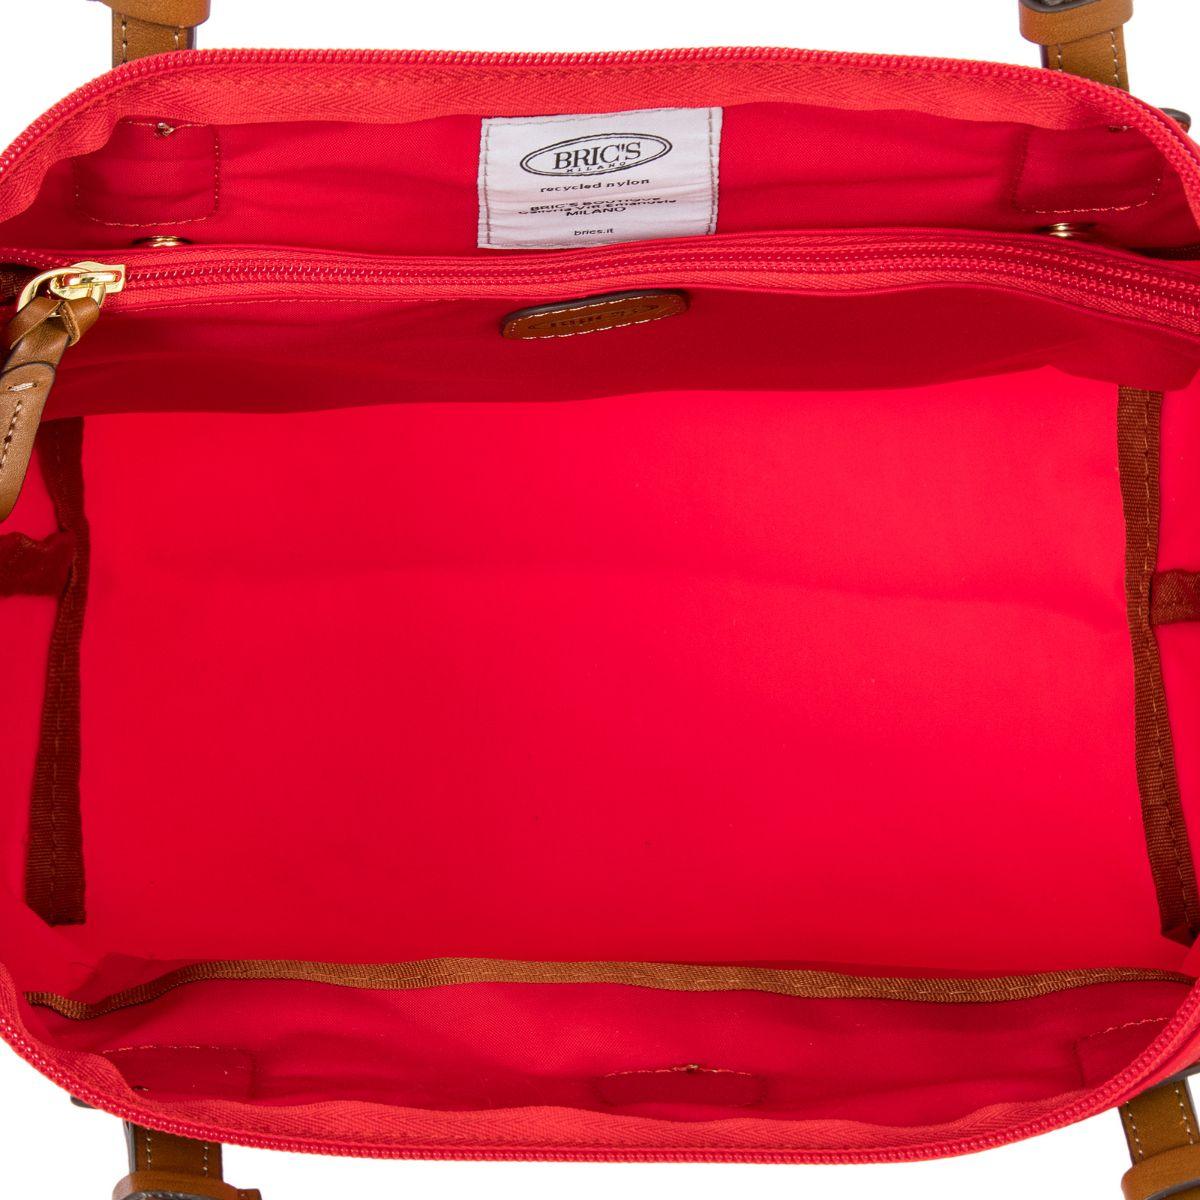 Binnenkant Bric's x-bag medium rood #kleur_rood